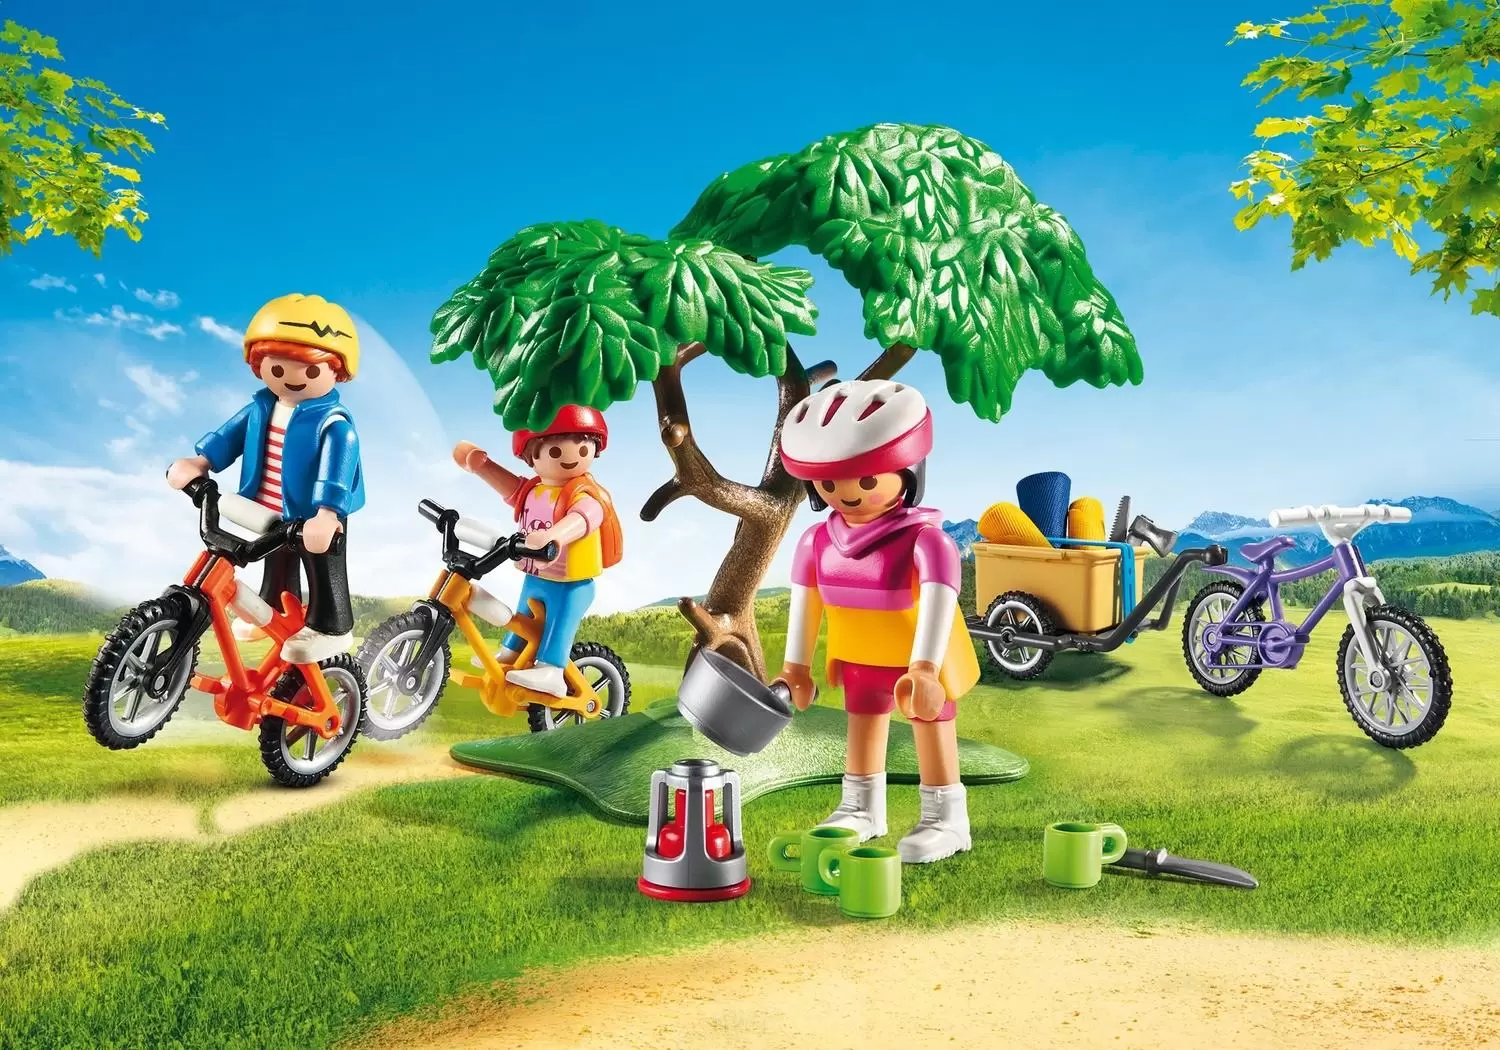 Playmobil en vacances - Cyclistes avec vélos et remorque